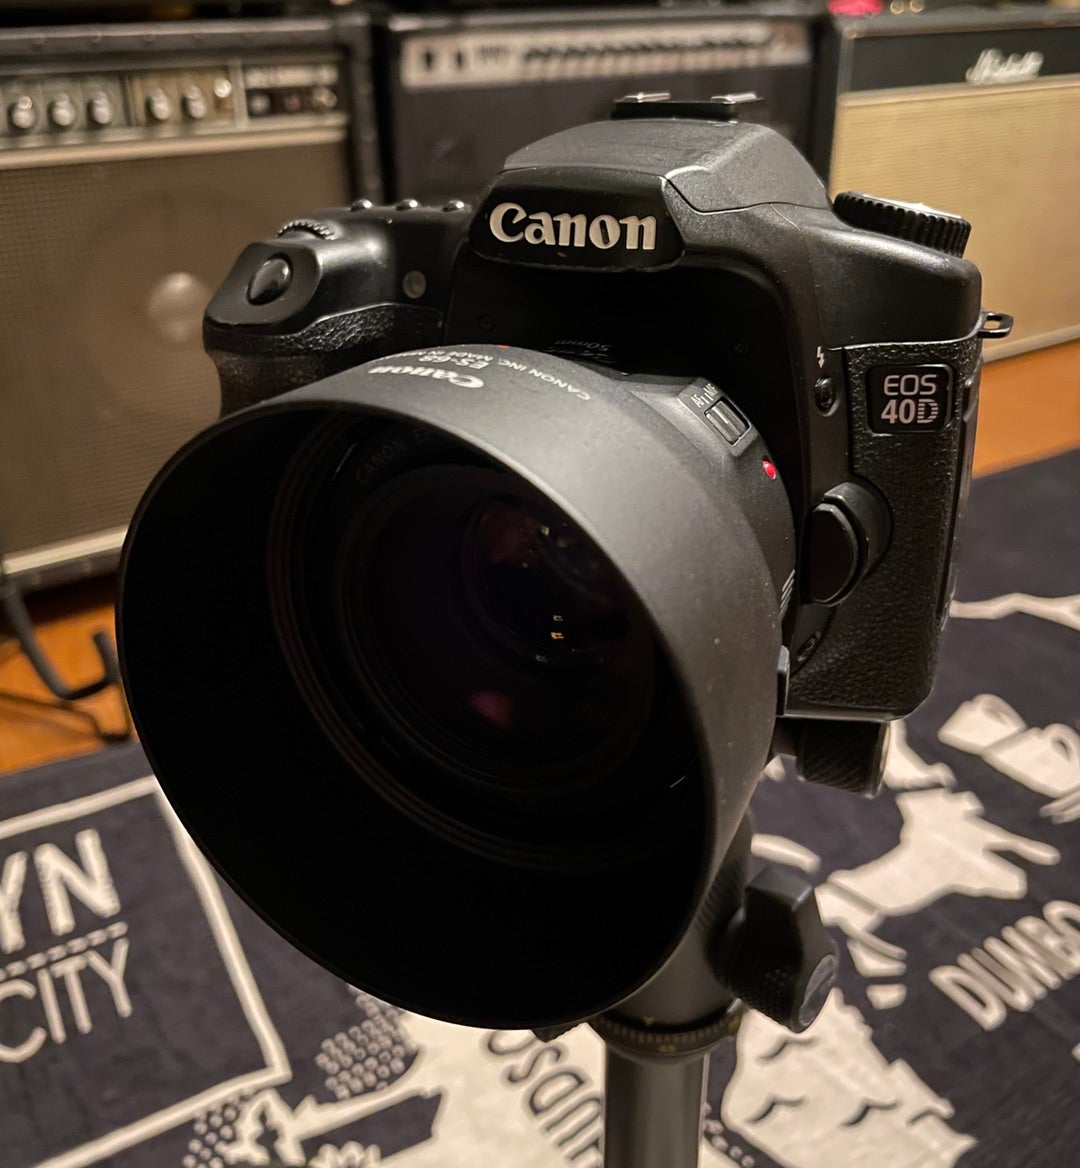 Canon EOS 40D(ジャンク) | ほぼジャンクな機材で綴る写真の魔法